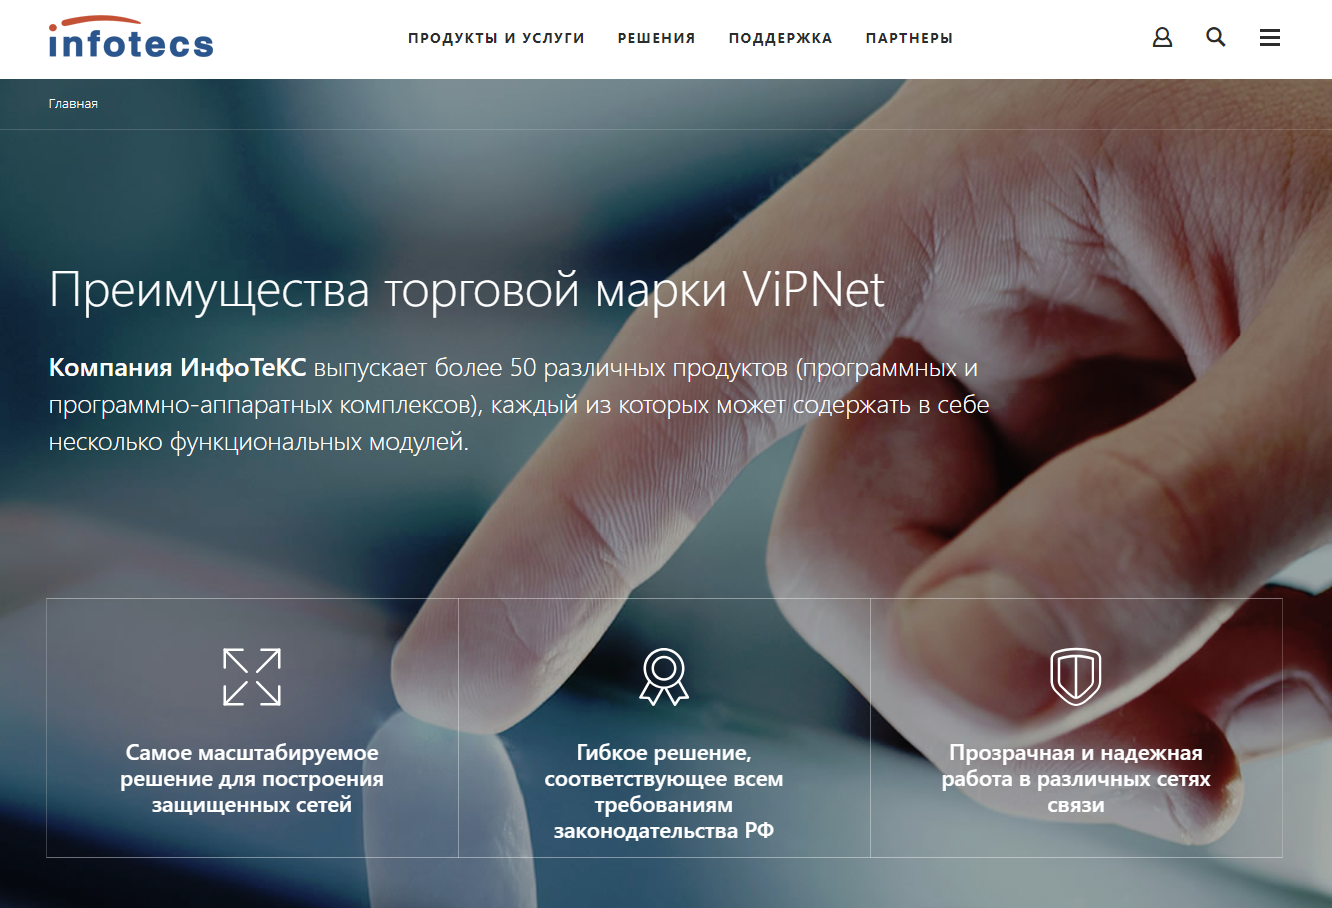 infotecs.ru/product